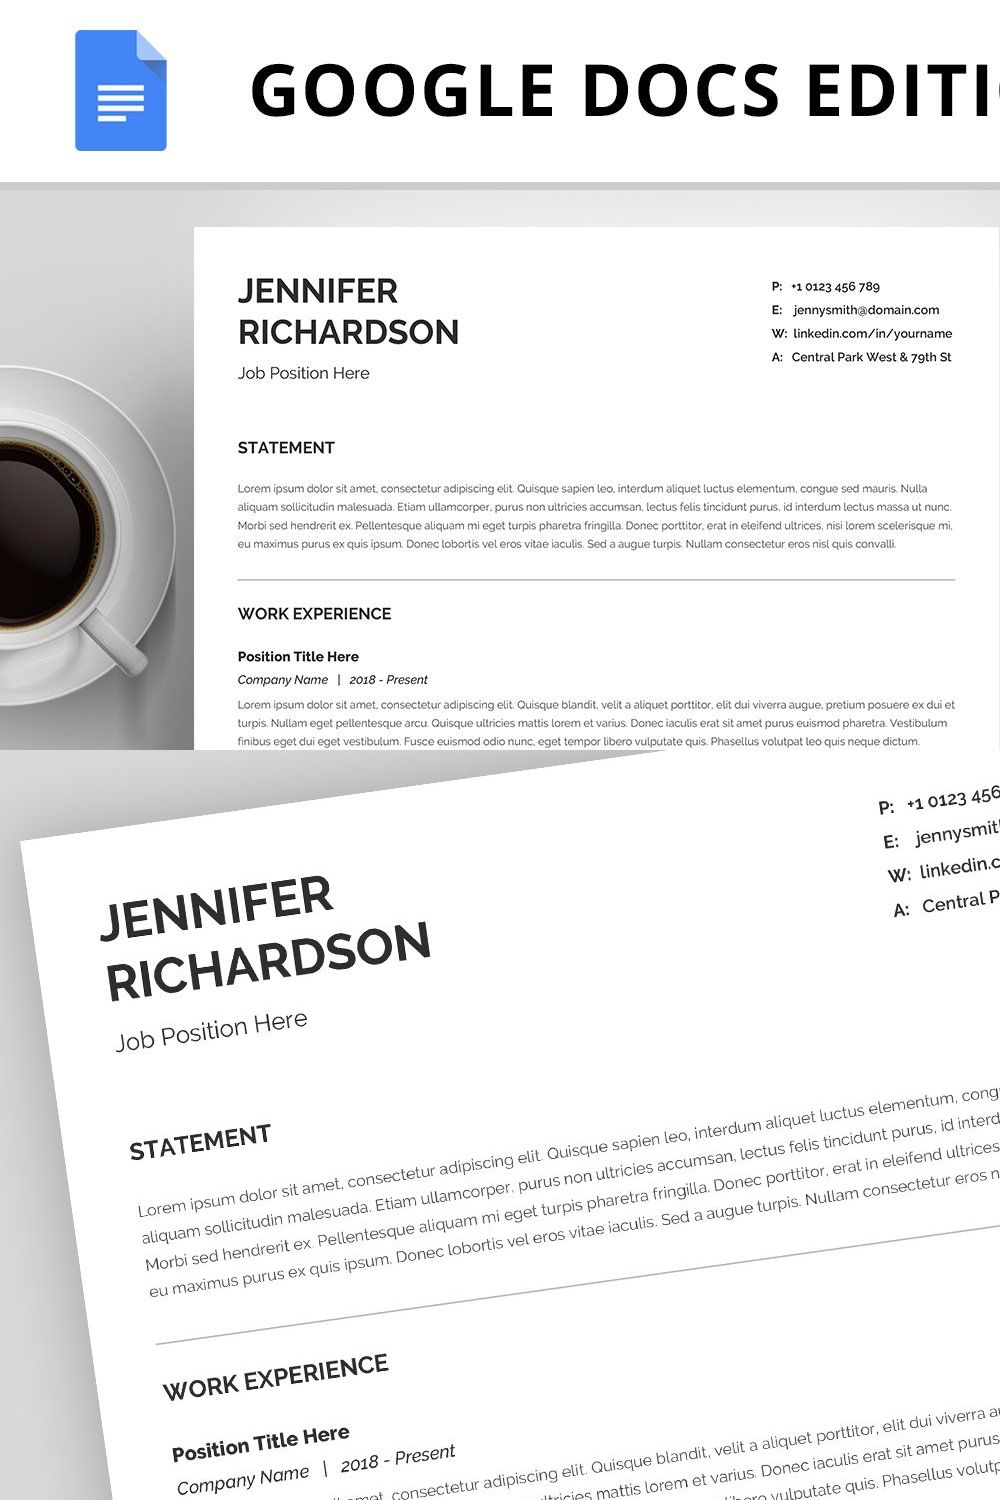 Resume Template, CV, Google Docs pinterest preview image.